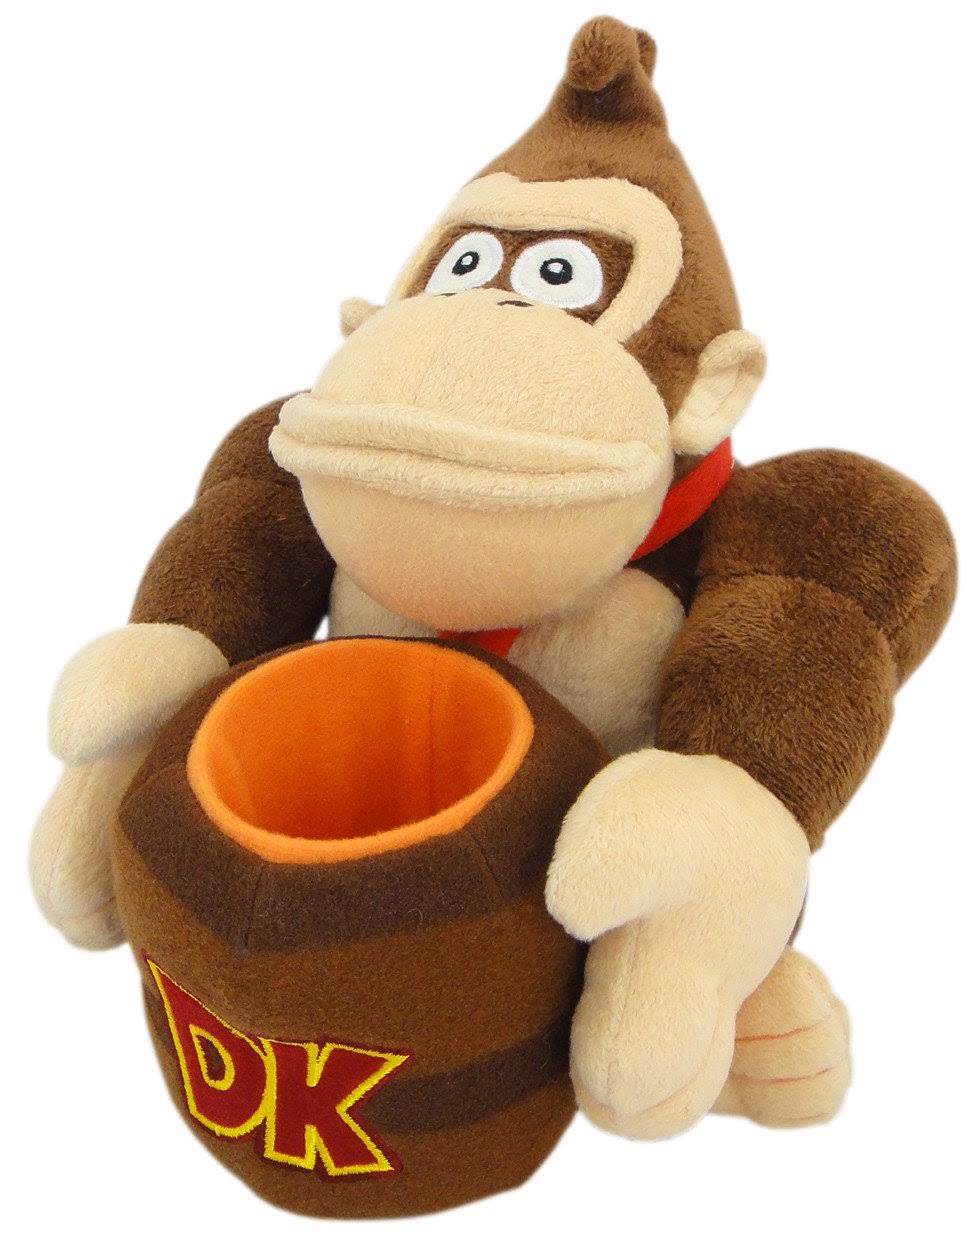 Little Buddy Super Mario Donkey Kong Plush Toy - with Barrell, 8"